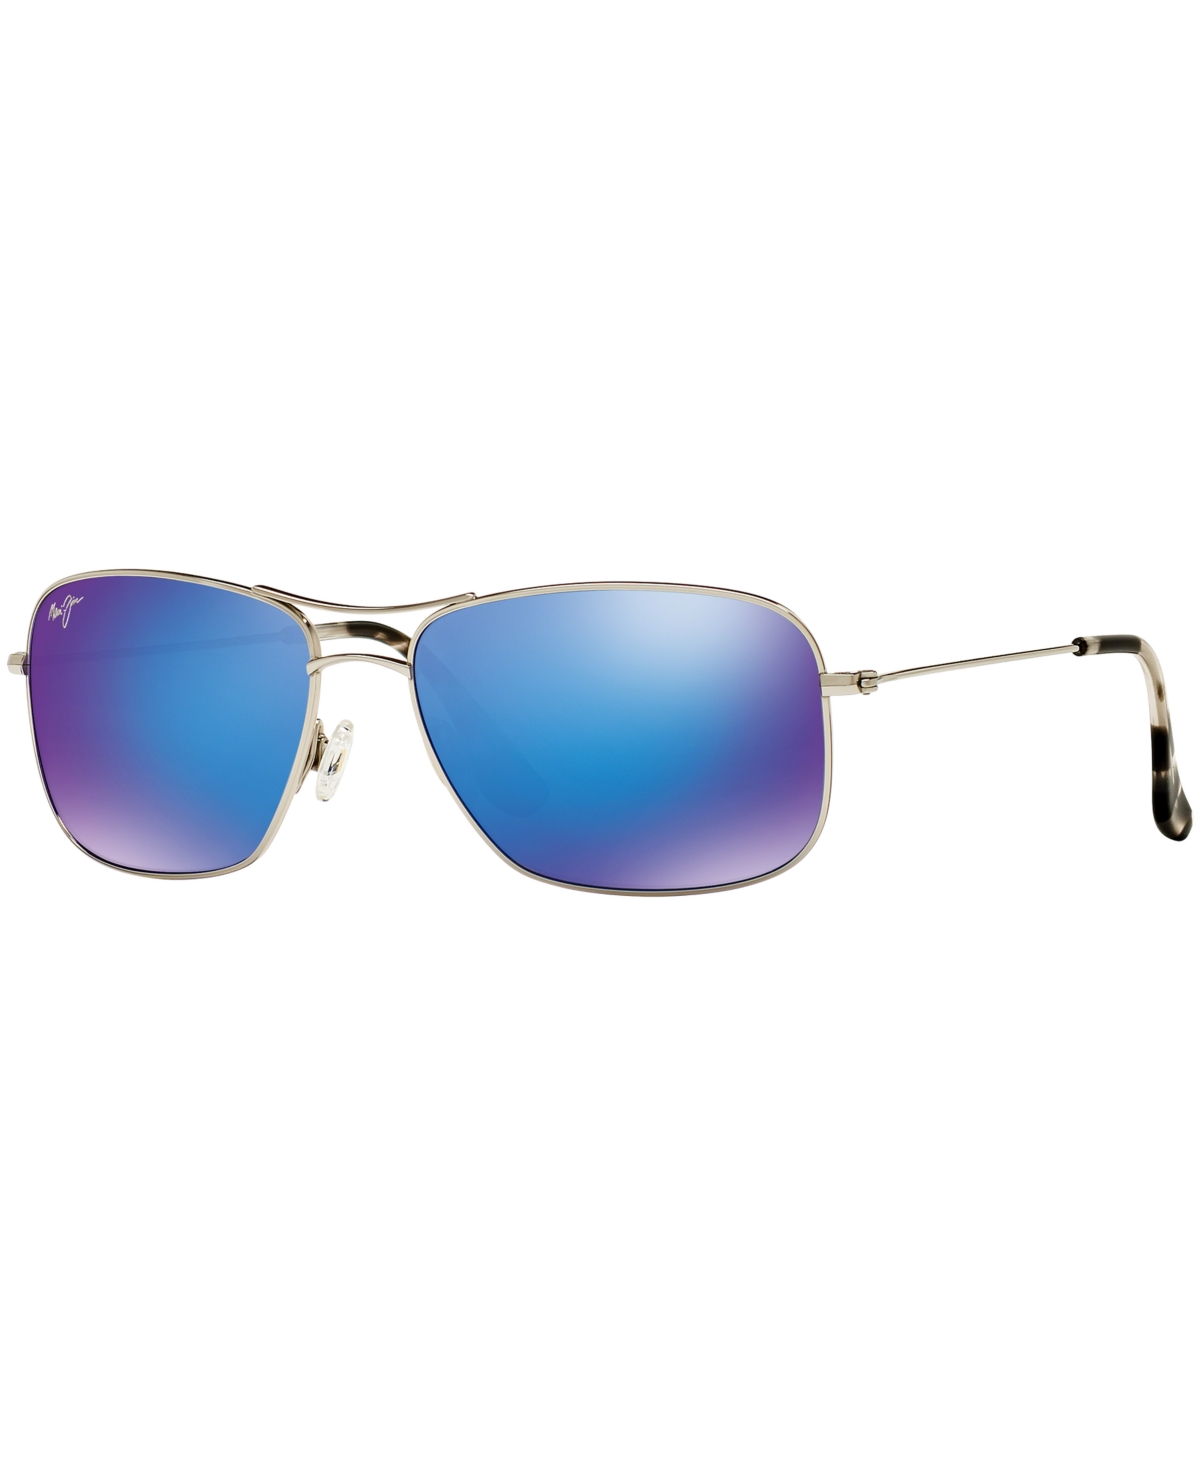 Polarized Wiki Wiki Sunglasses , 246 - SILVER SHINY/BLUE MIRROR POLAR